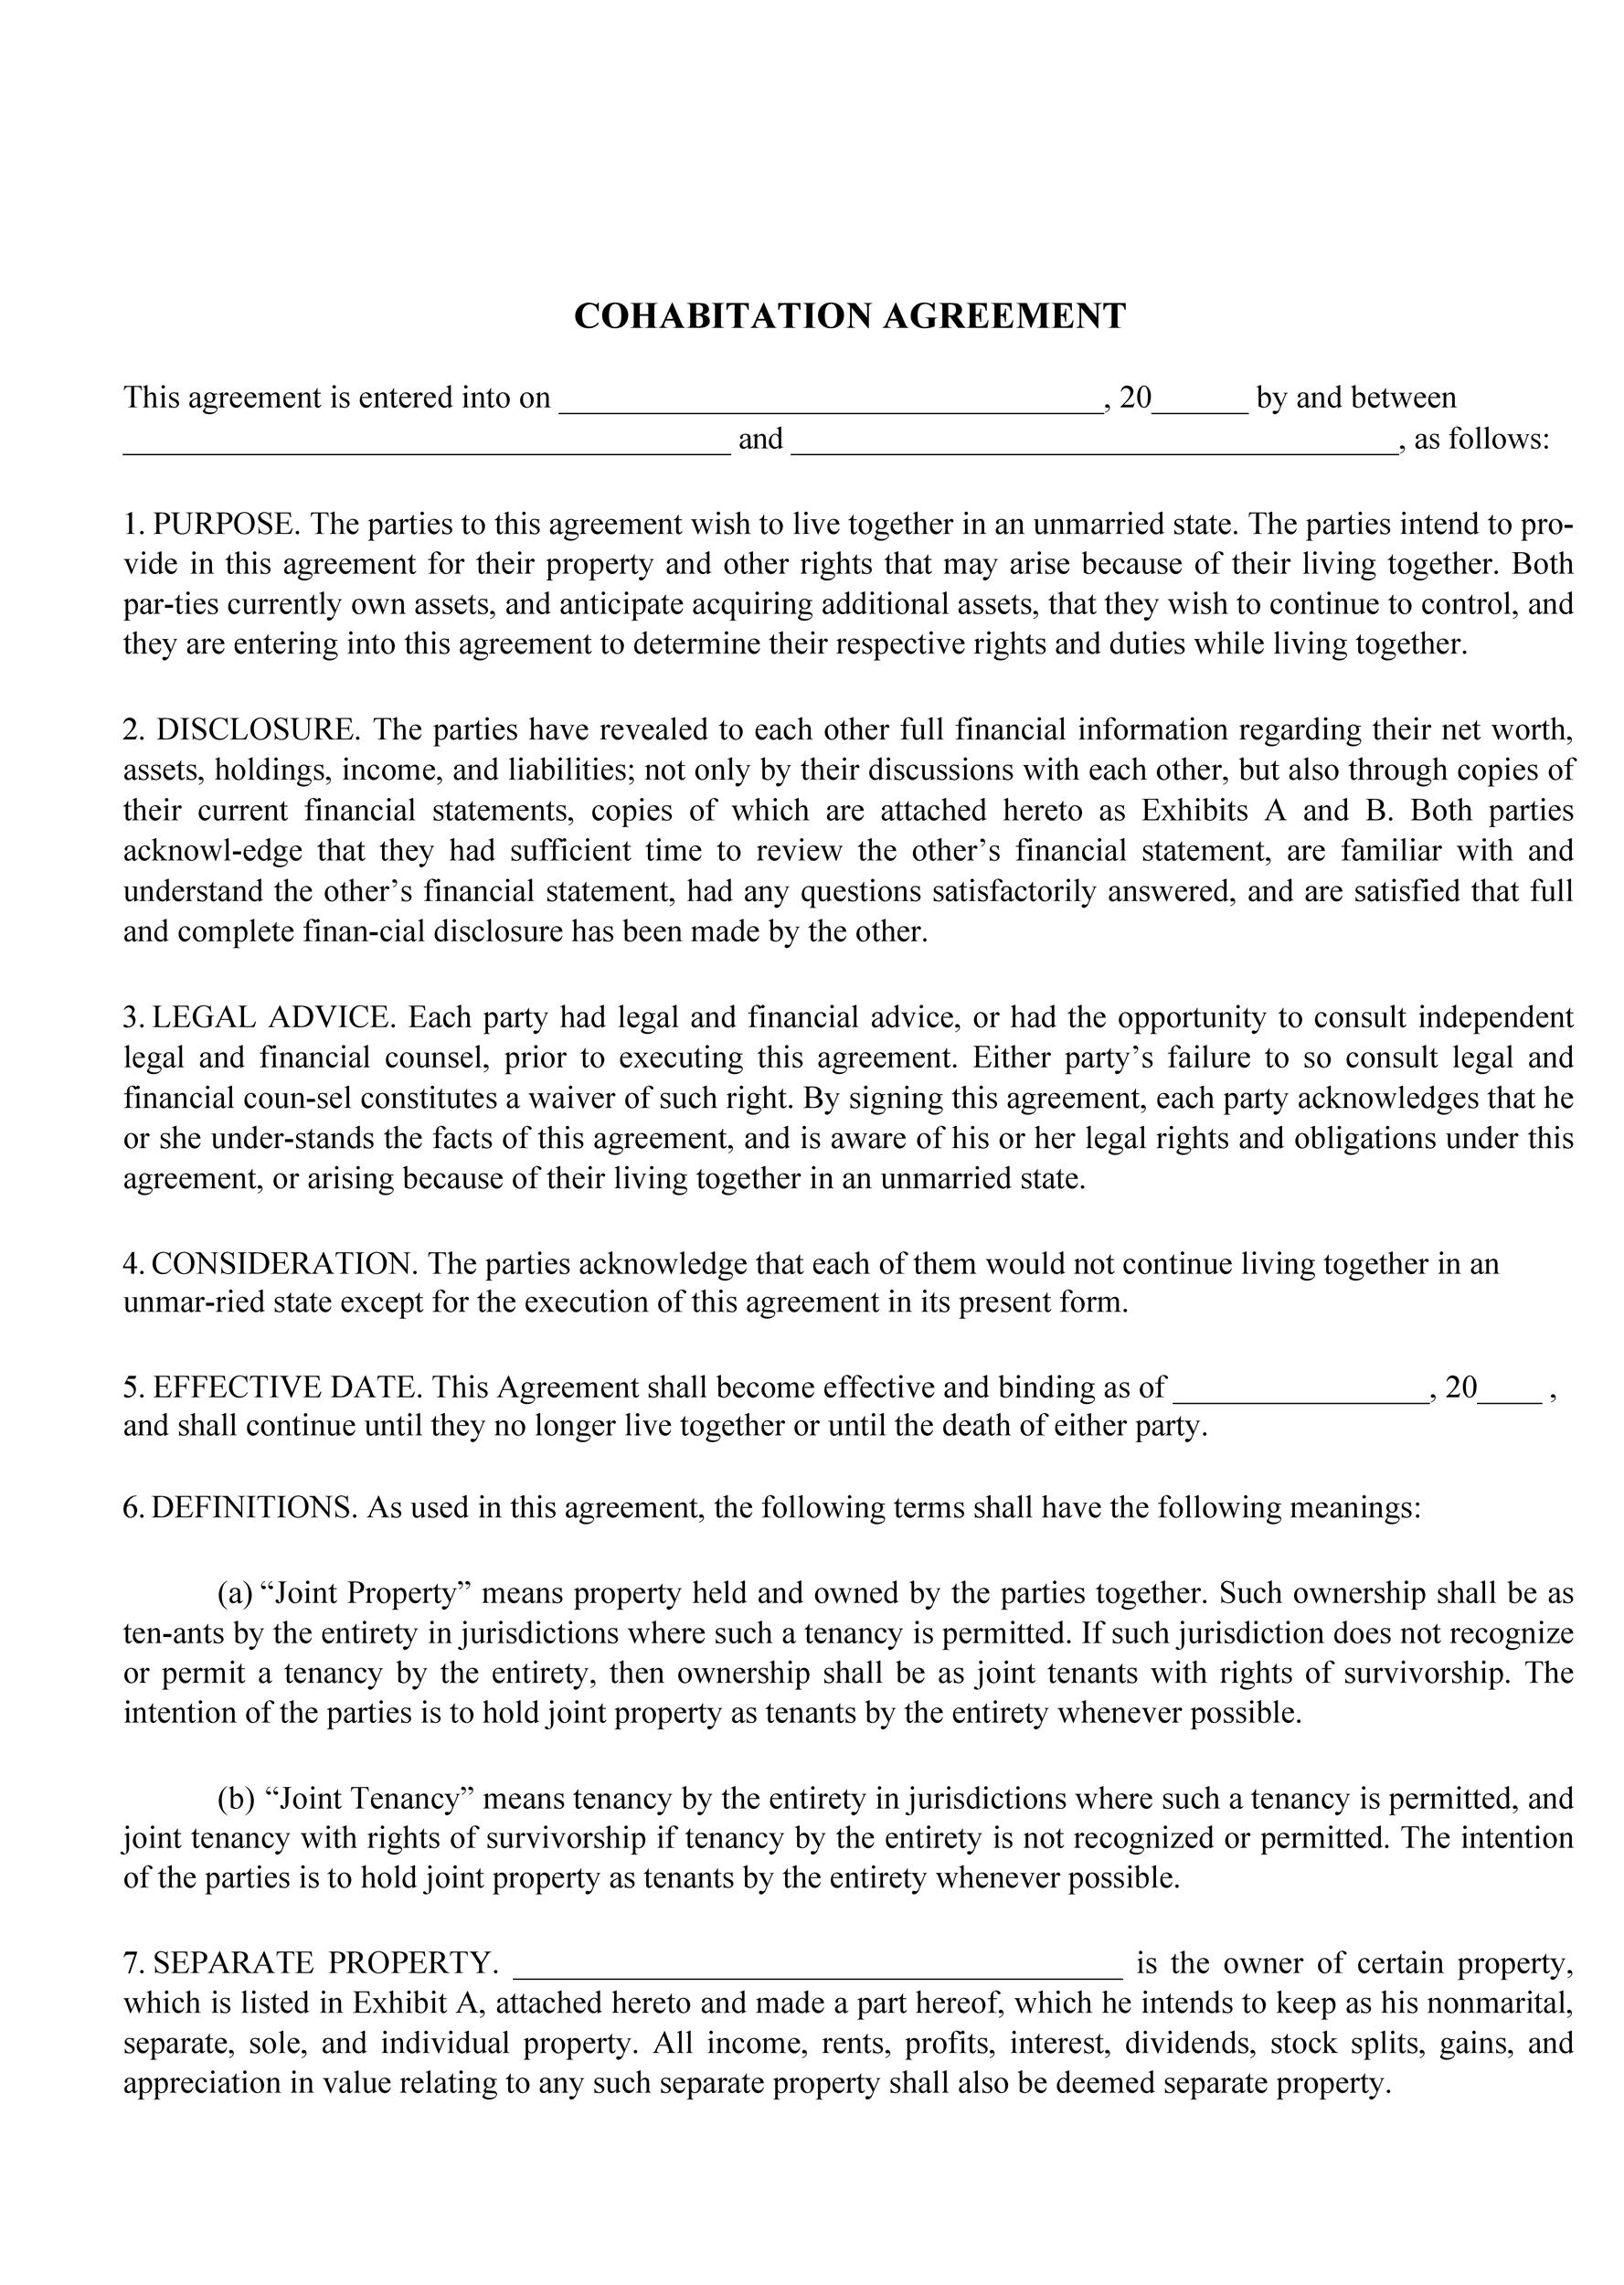 Free cohabitation agreement template 07